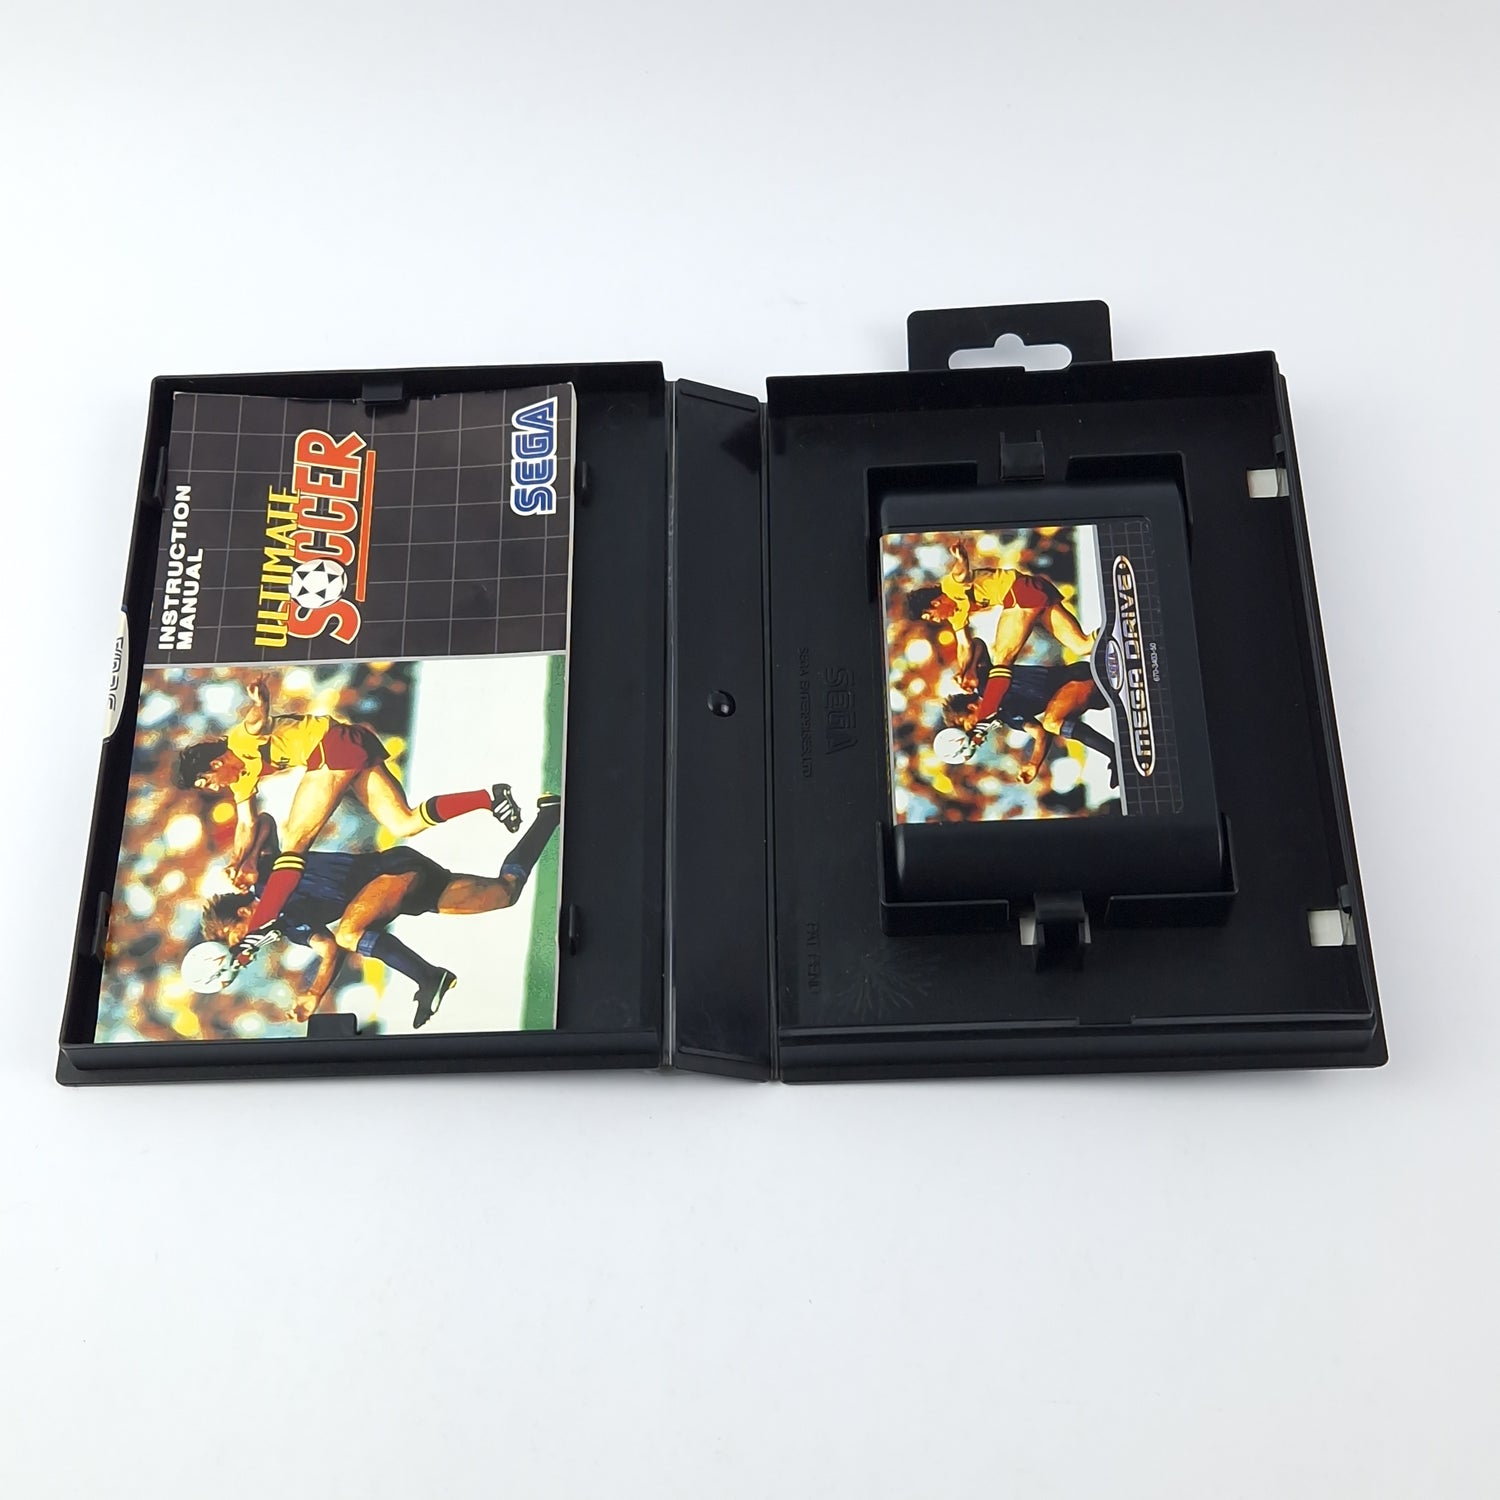 Sega Mega Drive Spiel : Ultimate Soccer - OVP Anleitung Modul | 16-Bit Fußball